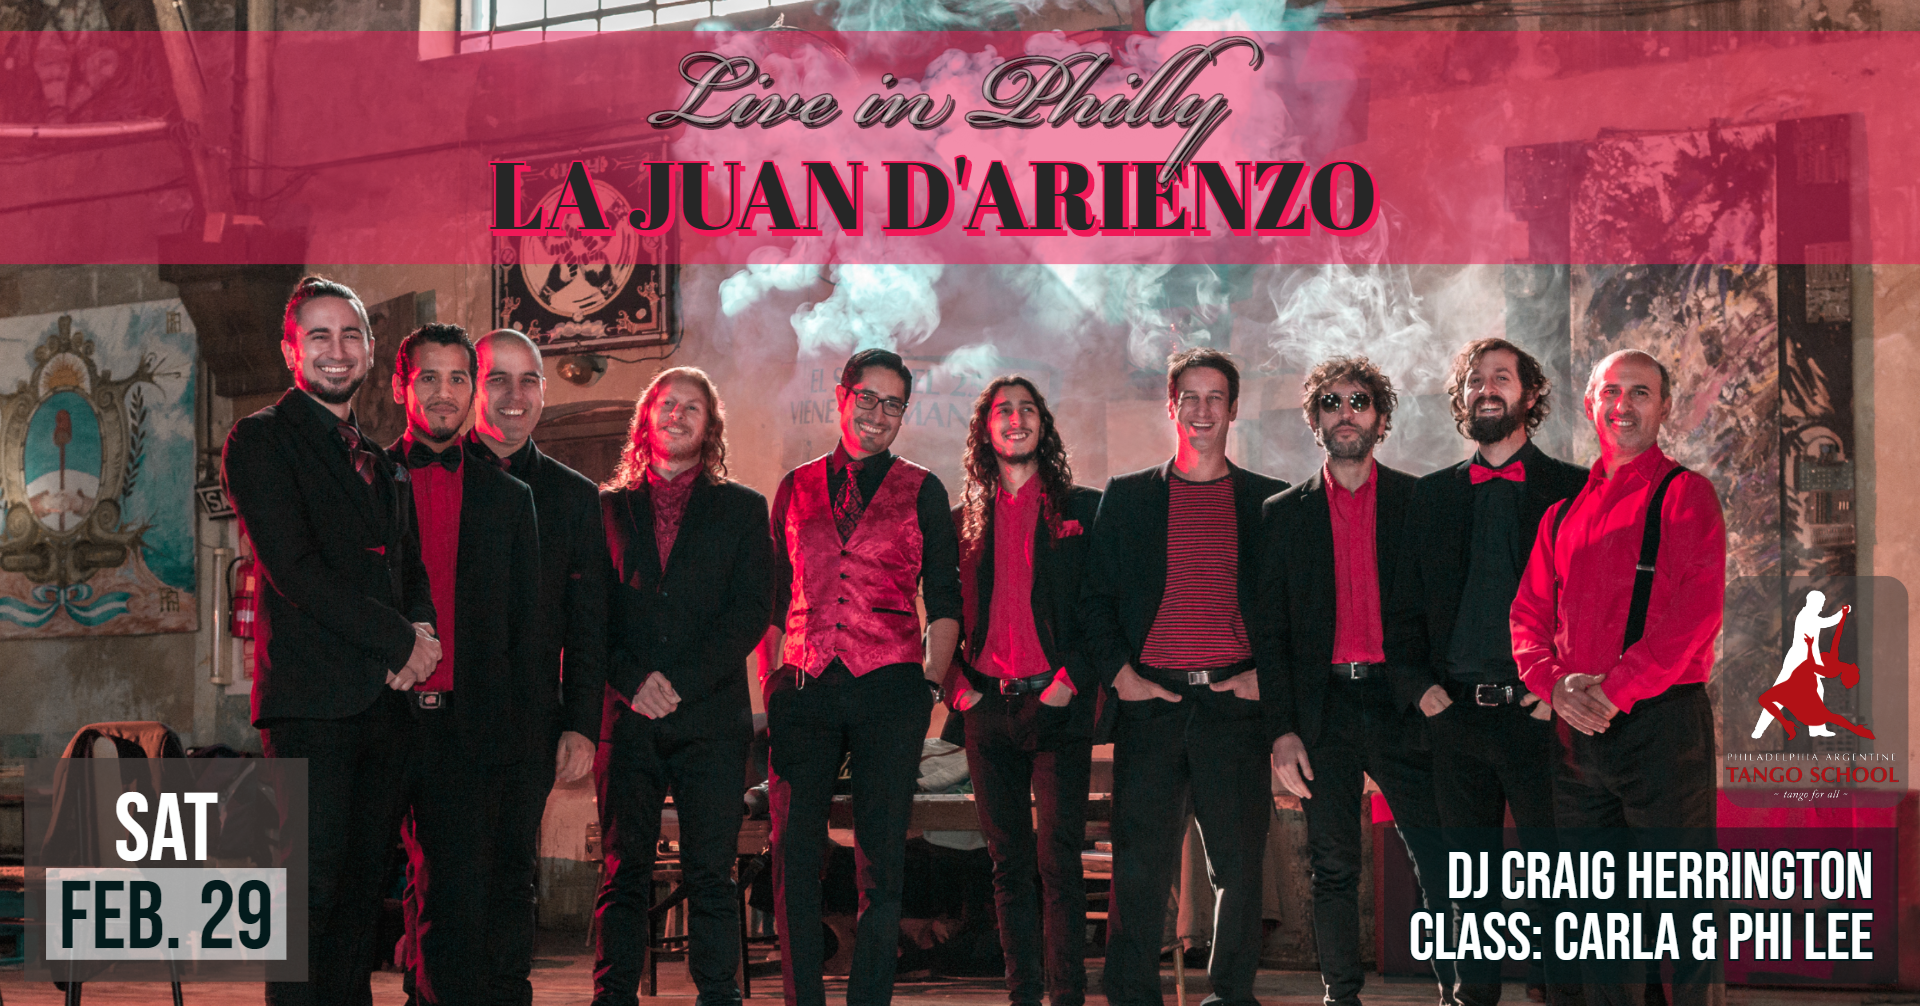 La Juan D’Arienzo Tango Orchestra LIVE MUSIC Milonga, plus class with Carla & Phi Lee, and DJ Craig Herrington